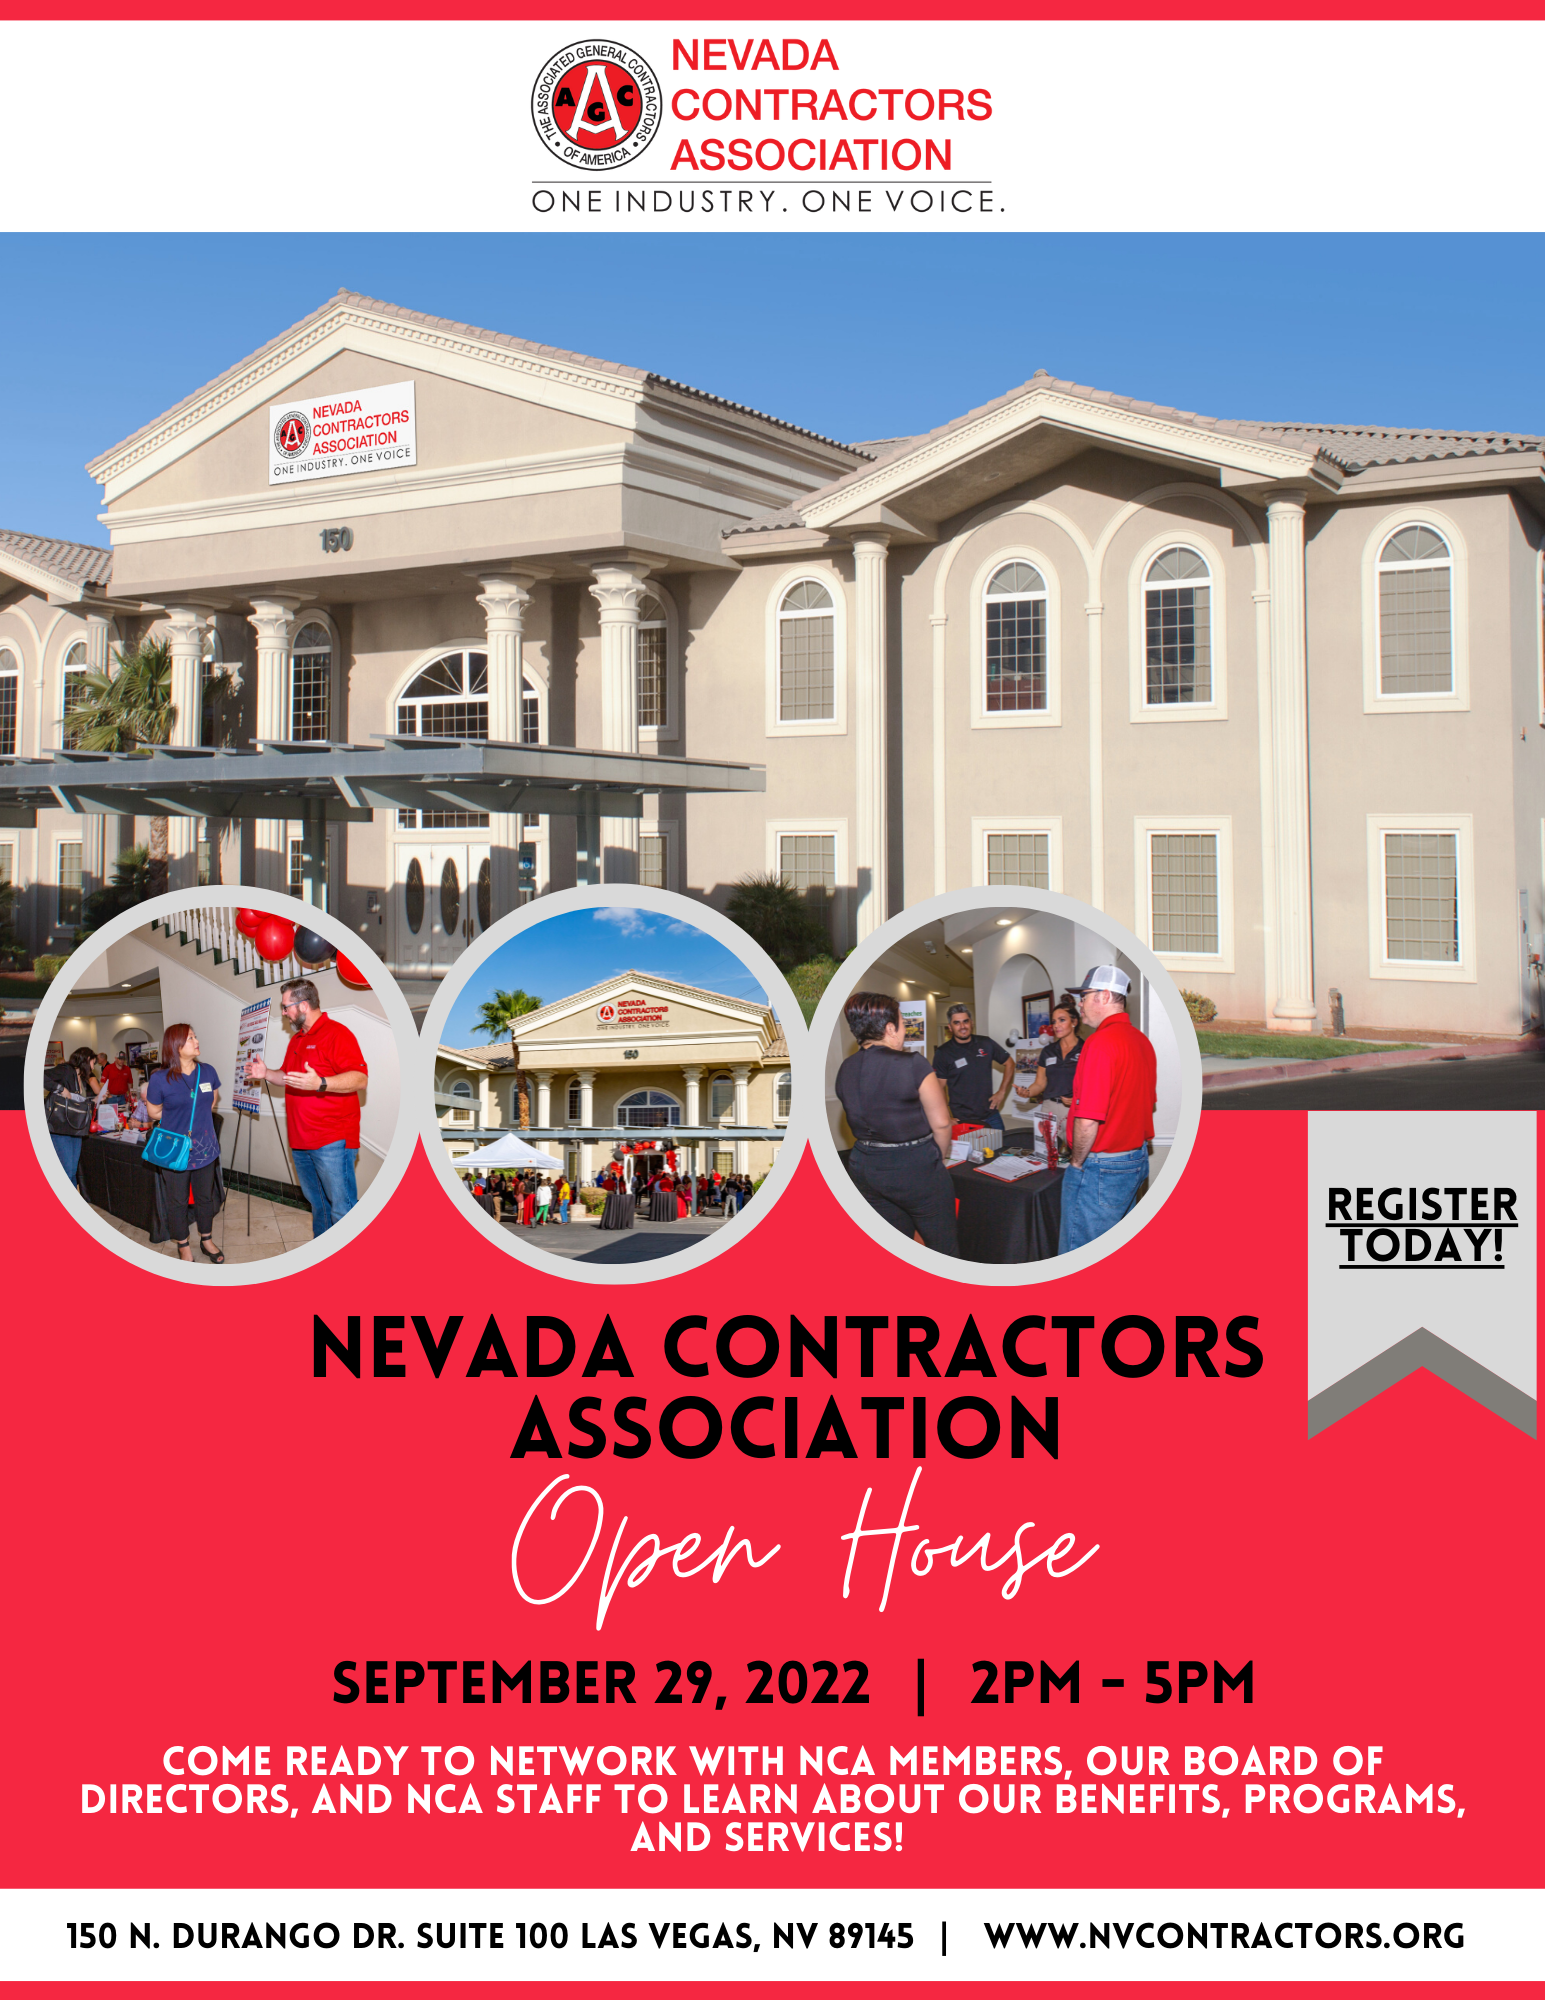 Board of Directors, NCA - Nevada Contractors Association